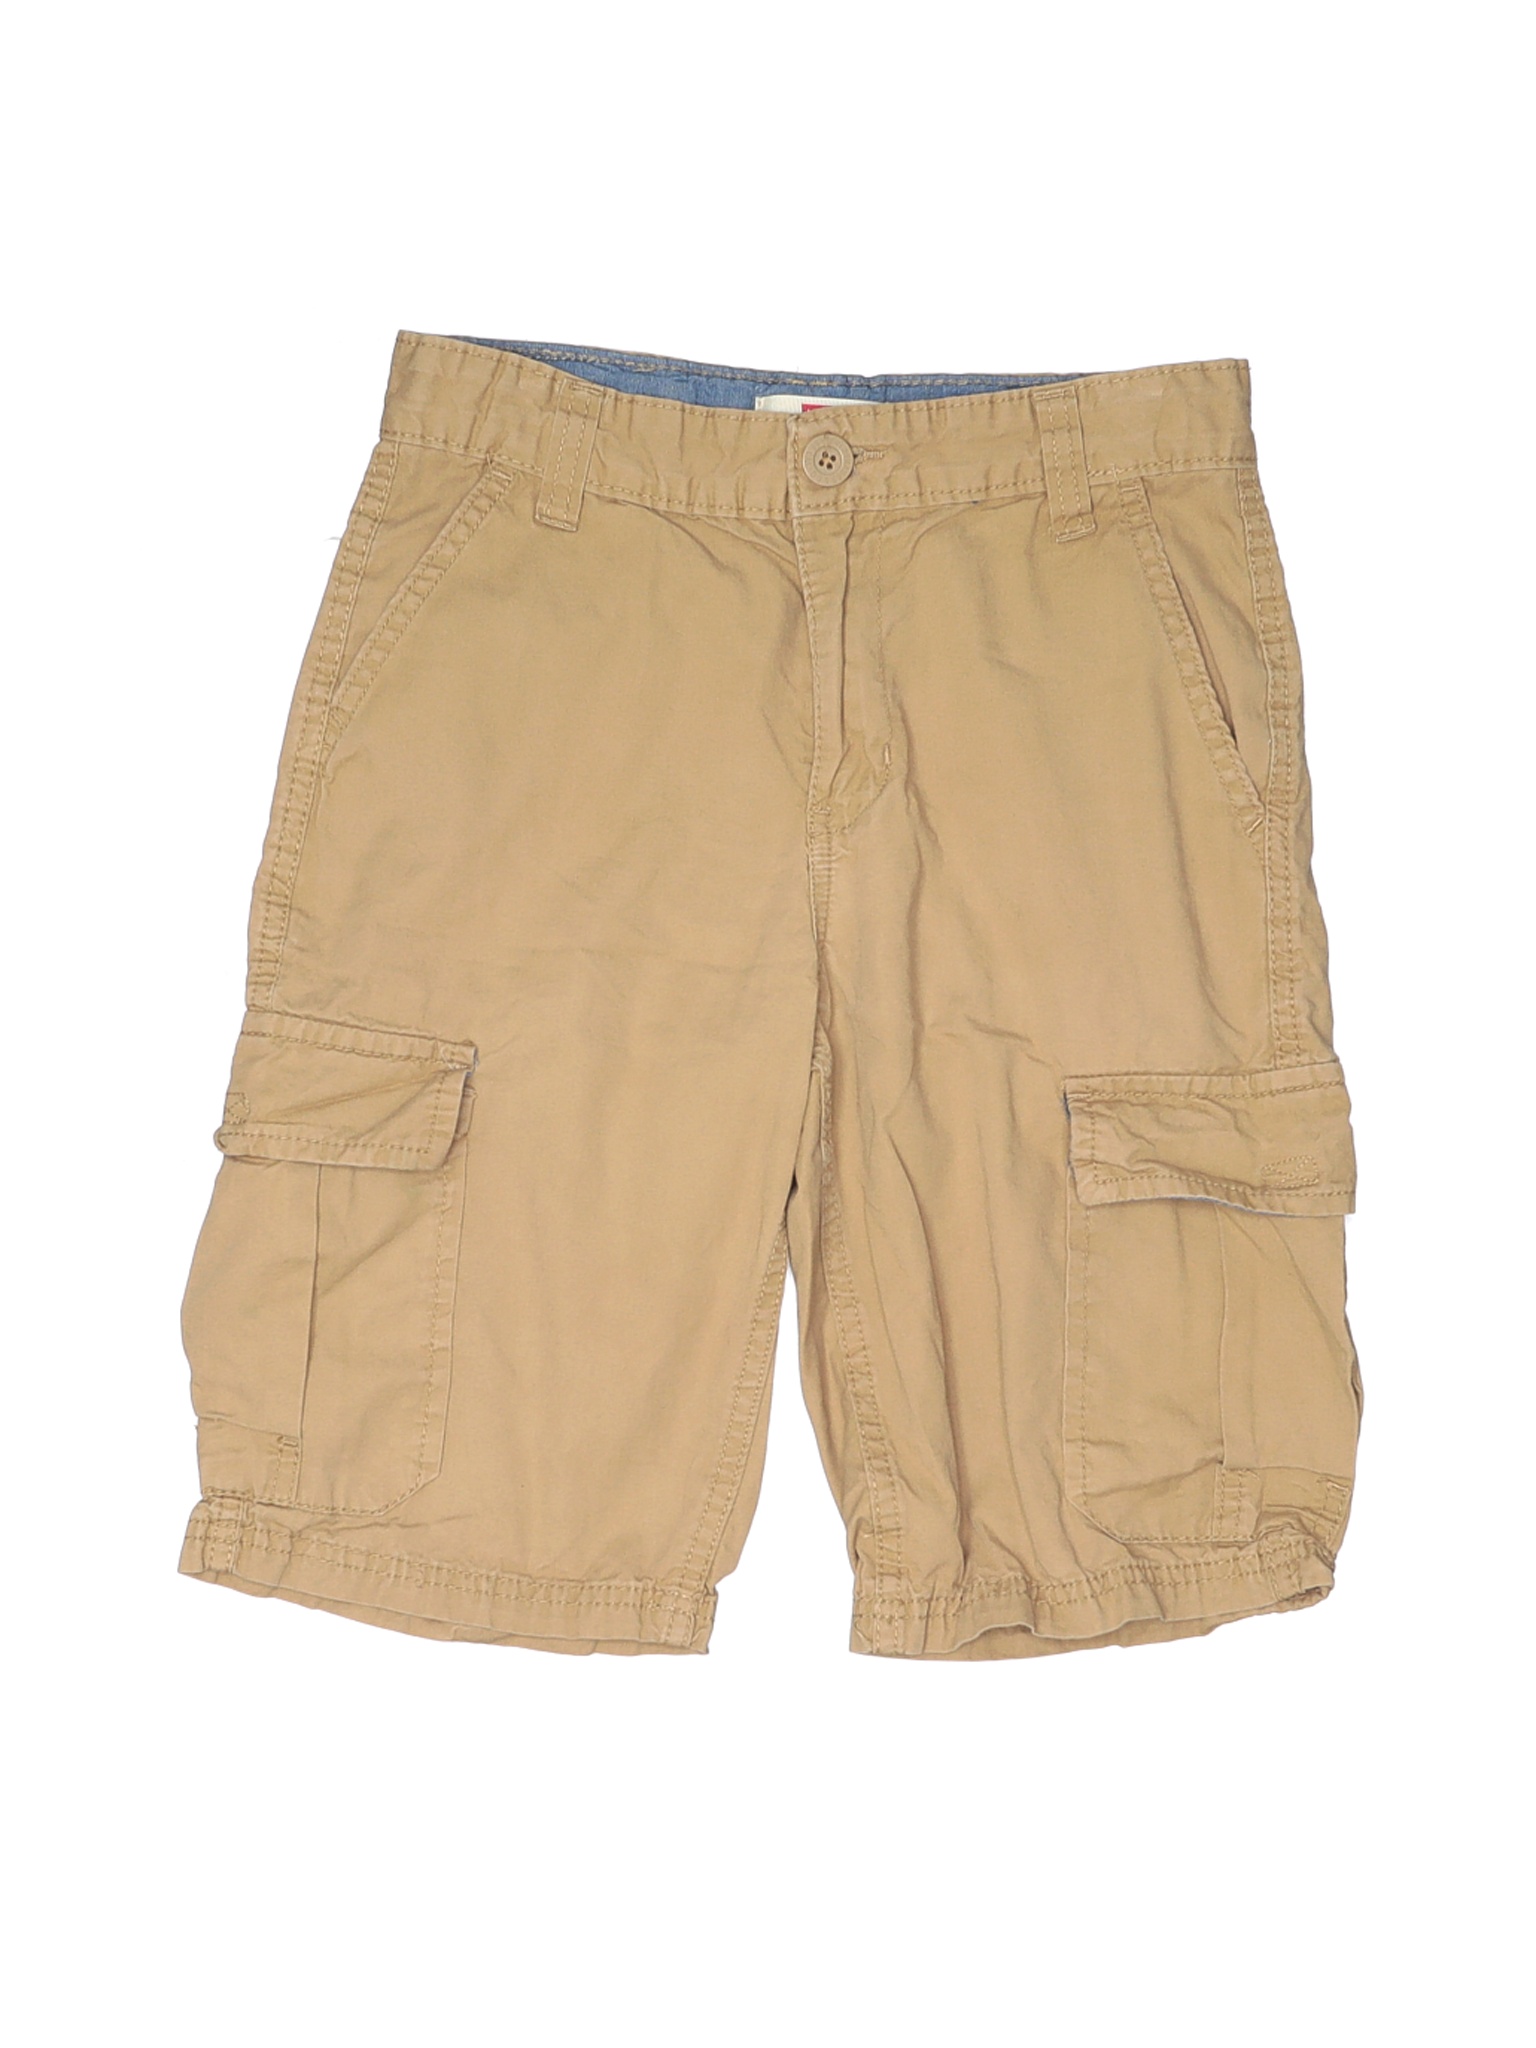 Levi's Boys Brown Cargo Shorts 10 | eBay